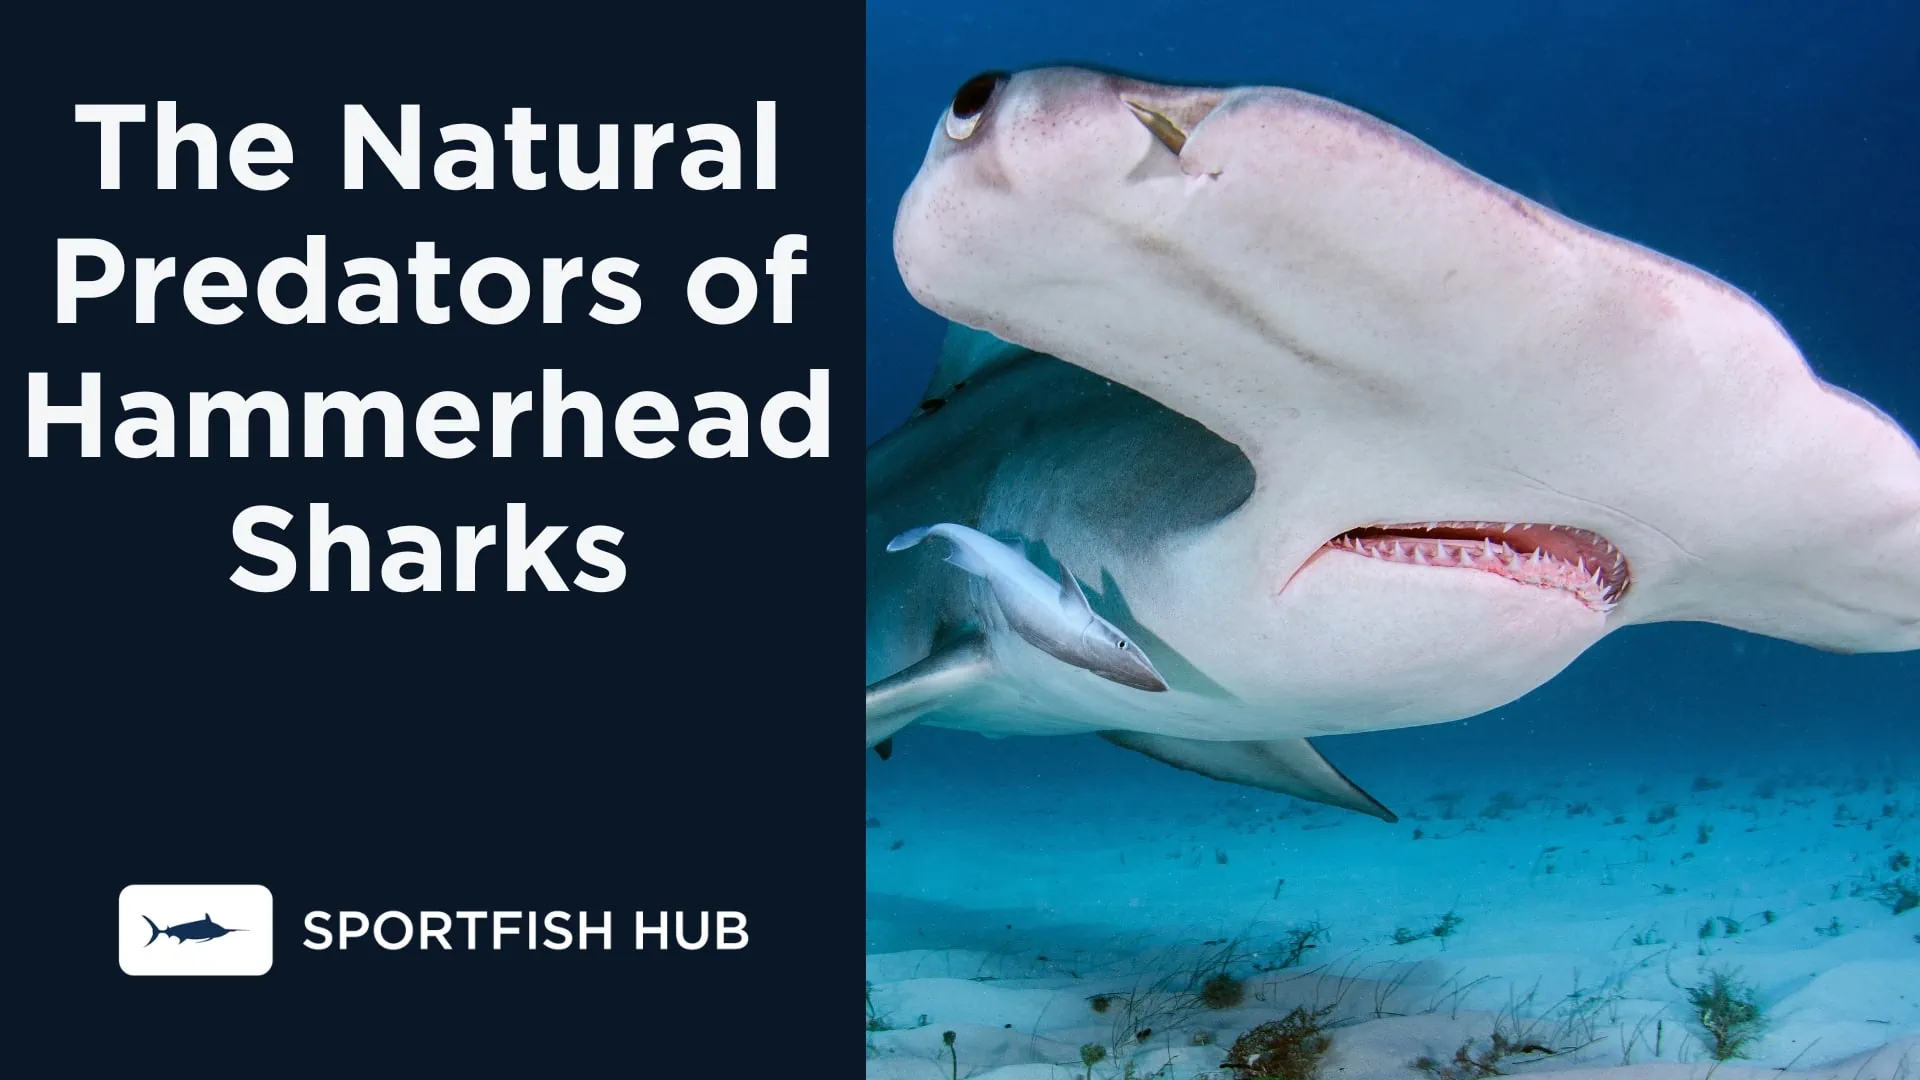 The Natural Predators of Hammerhead Sharks